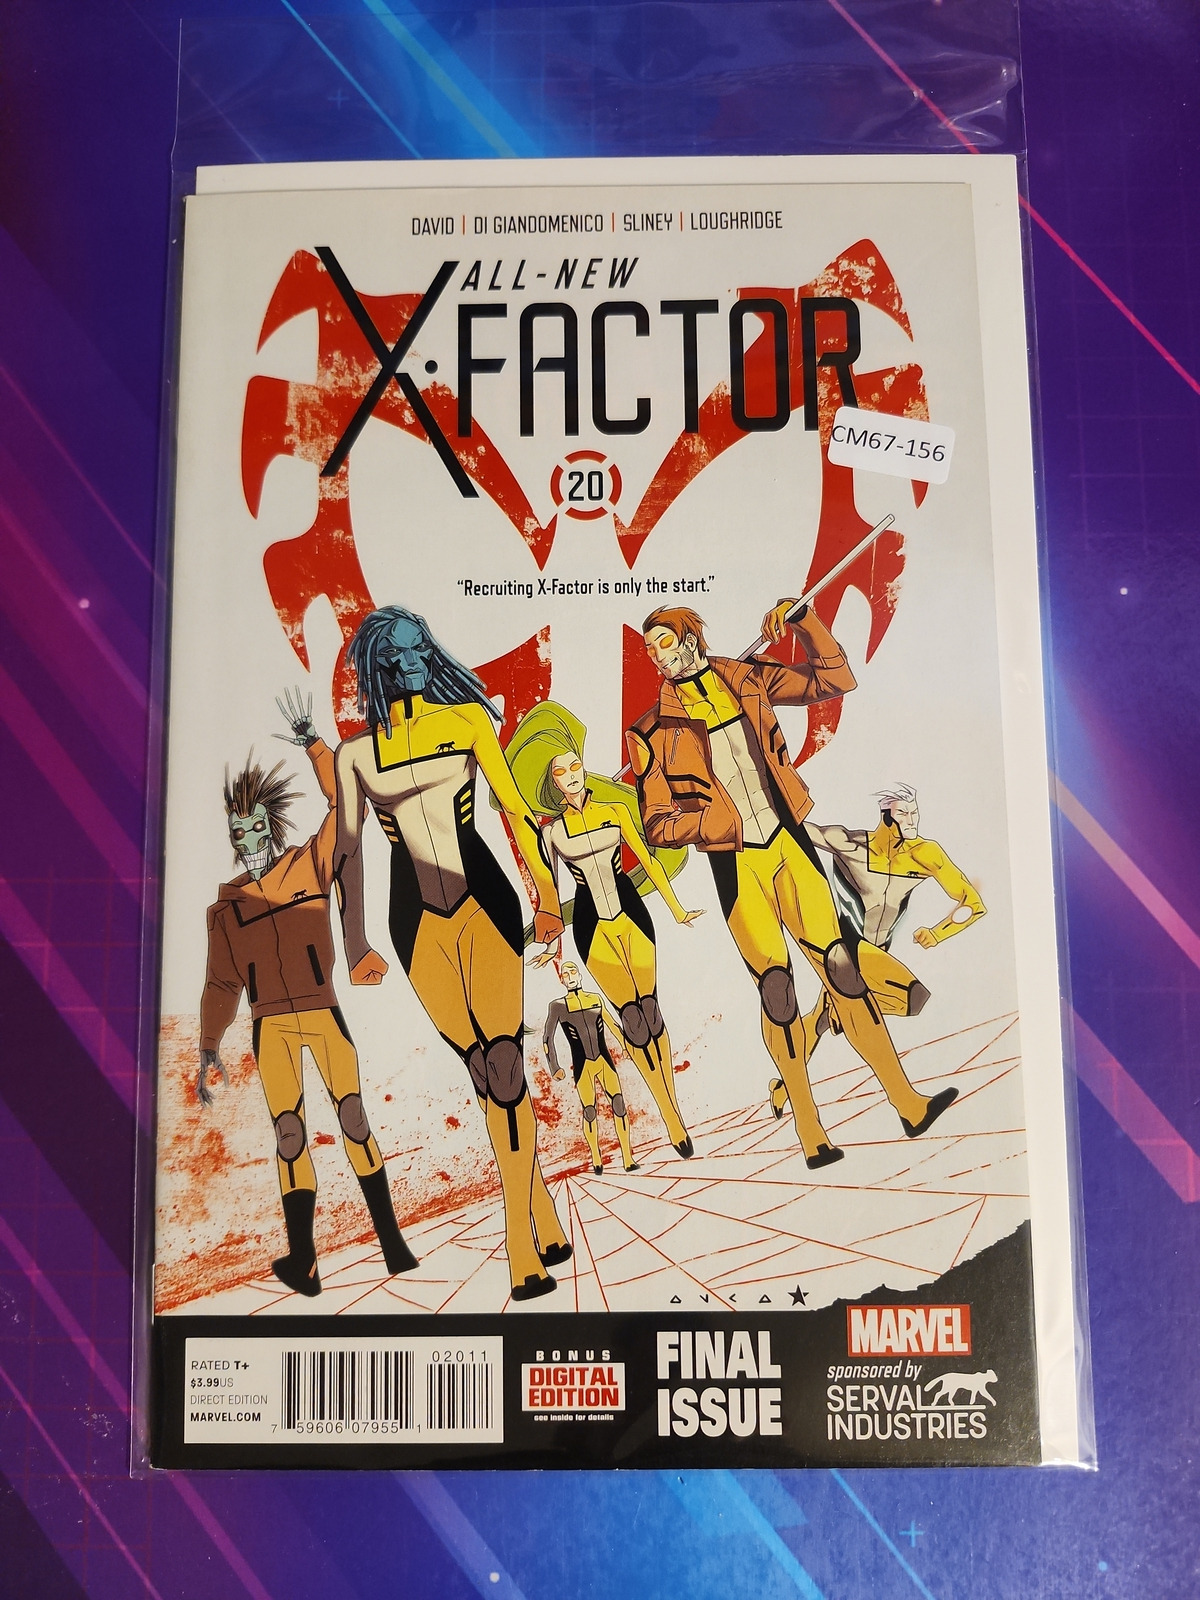 ALL-NEW X-FACTOR #20 HIGH GRADE MARVEL COMIC BOOK CM67-156